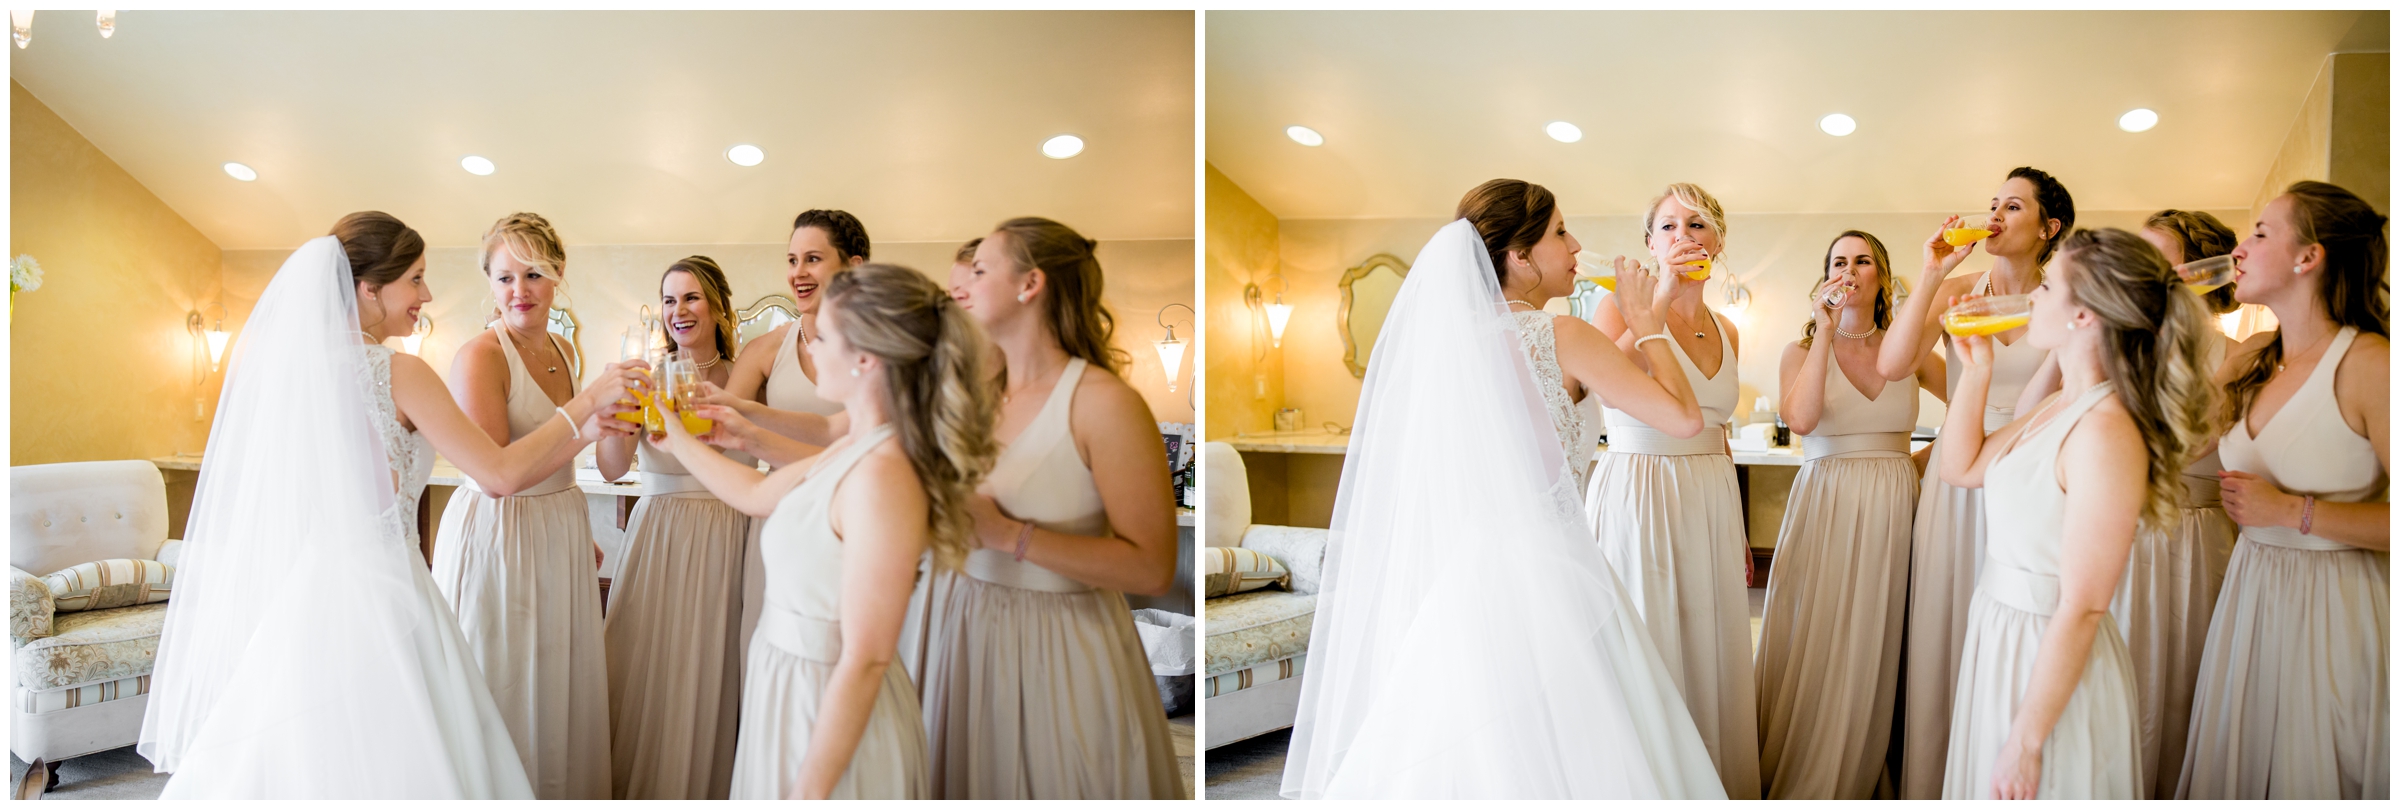 bride and bridesmaids toasting in Cielo Castle Pines bridal suite 